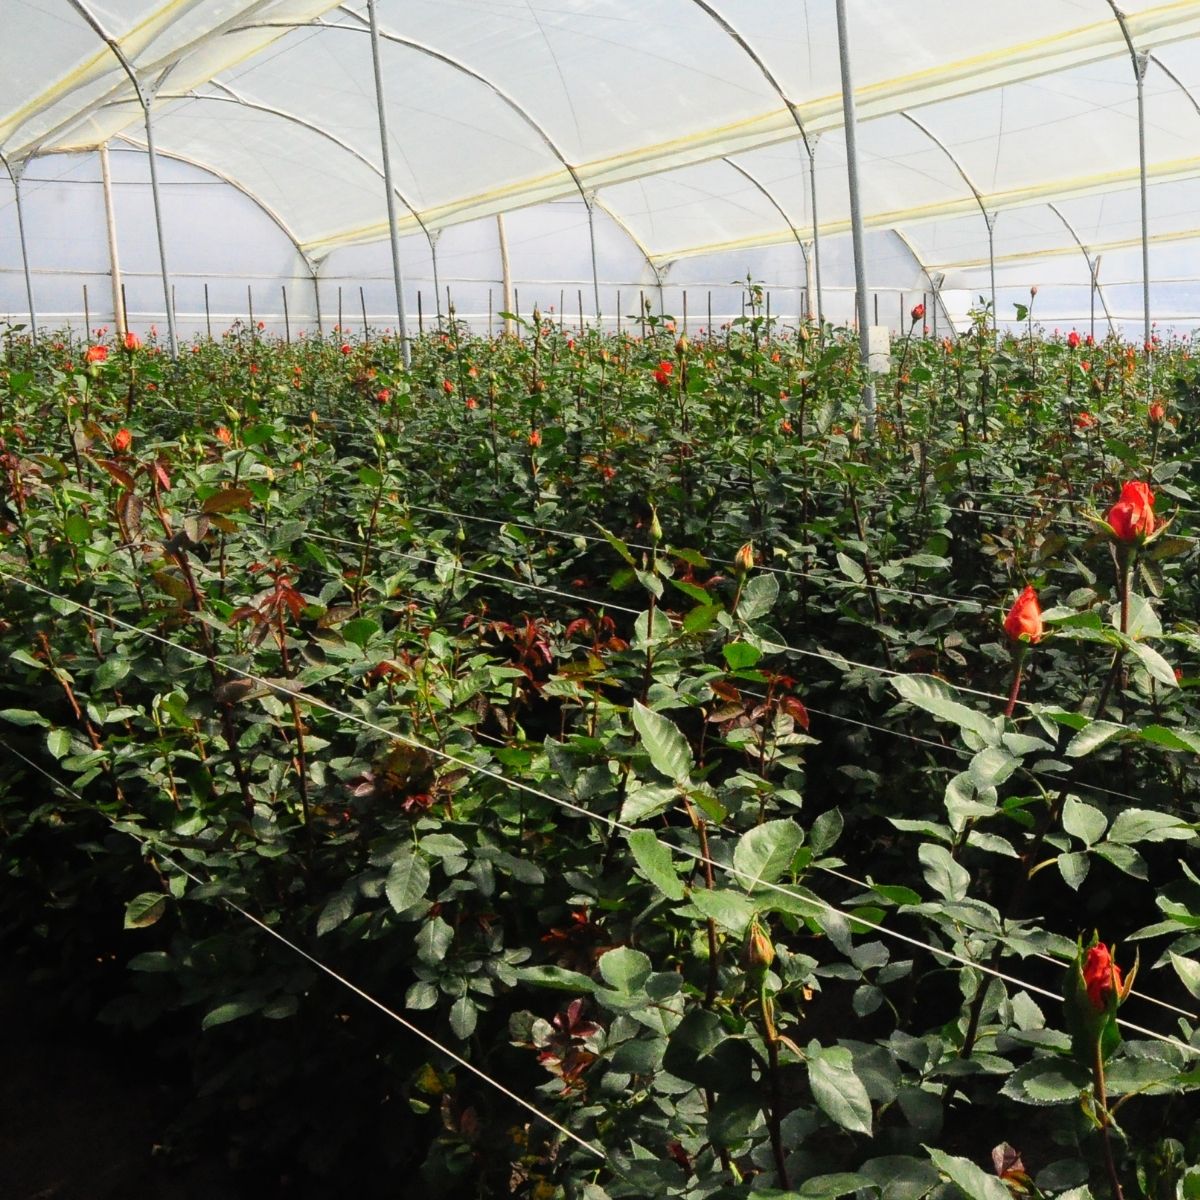 Roses fraiches dEquateur - Farm Direct - Cultivees de facon durable